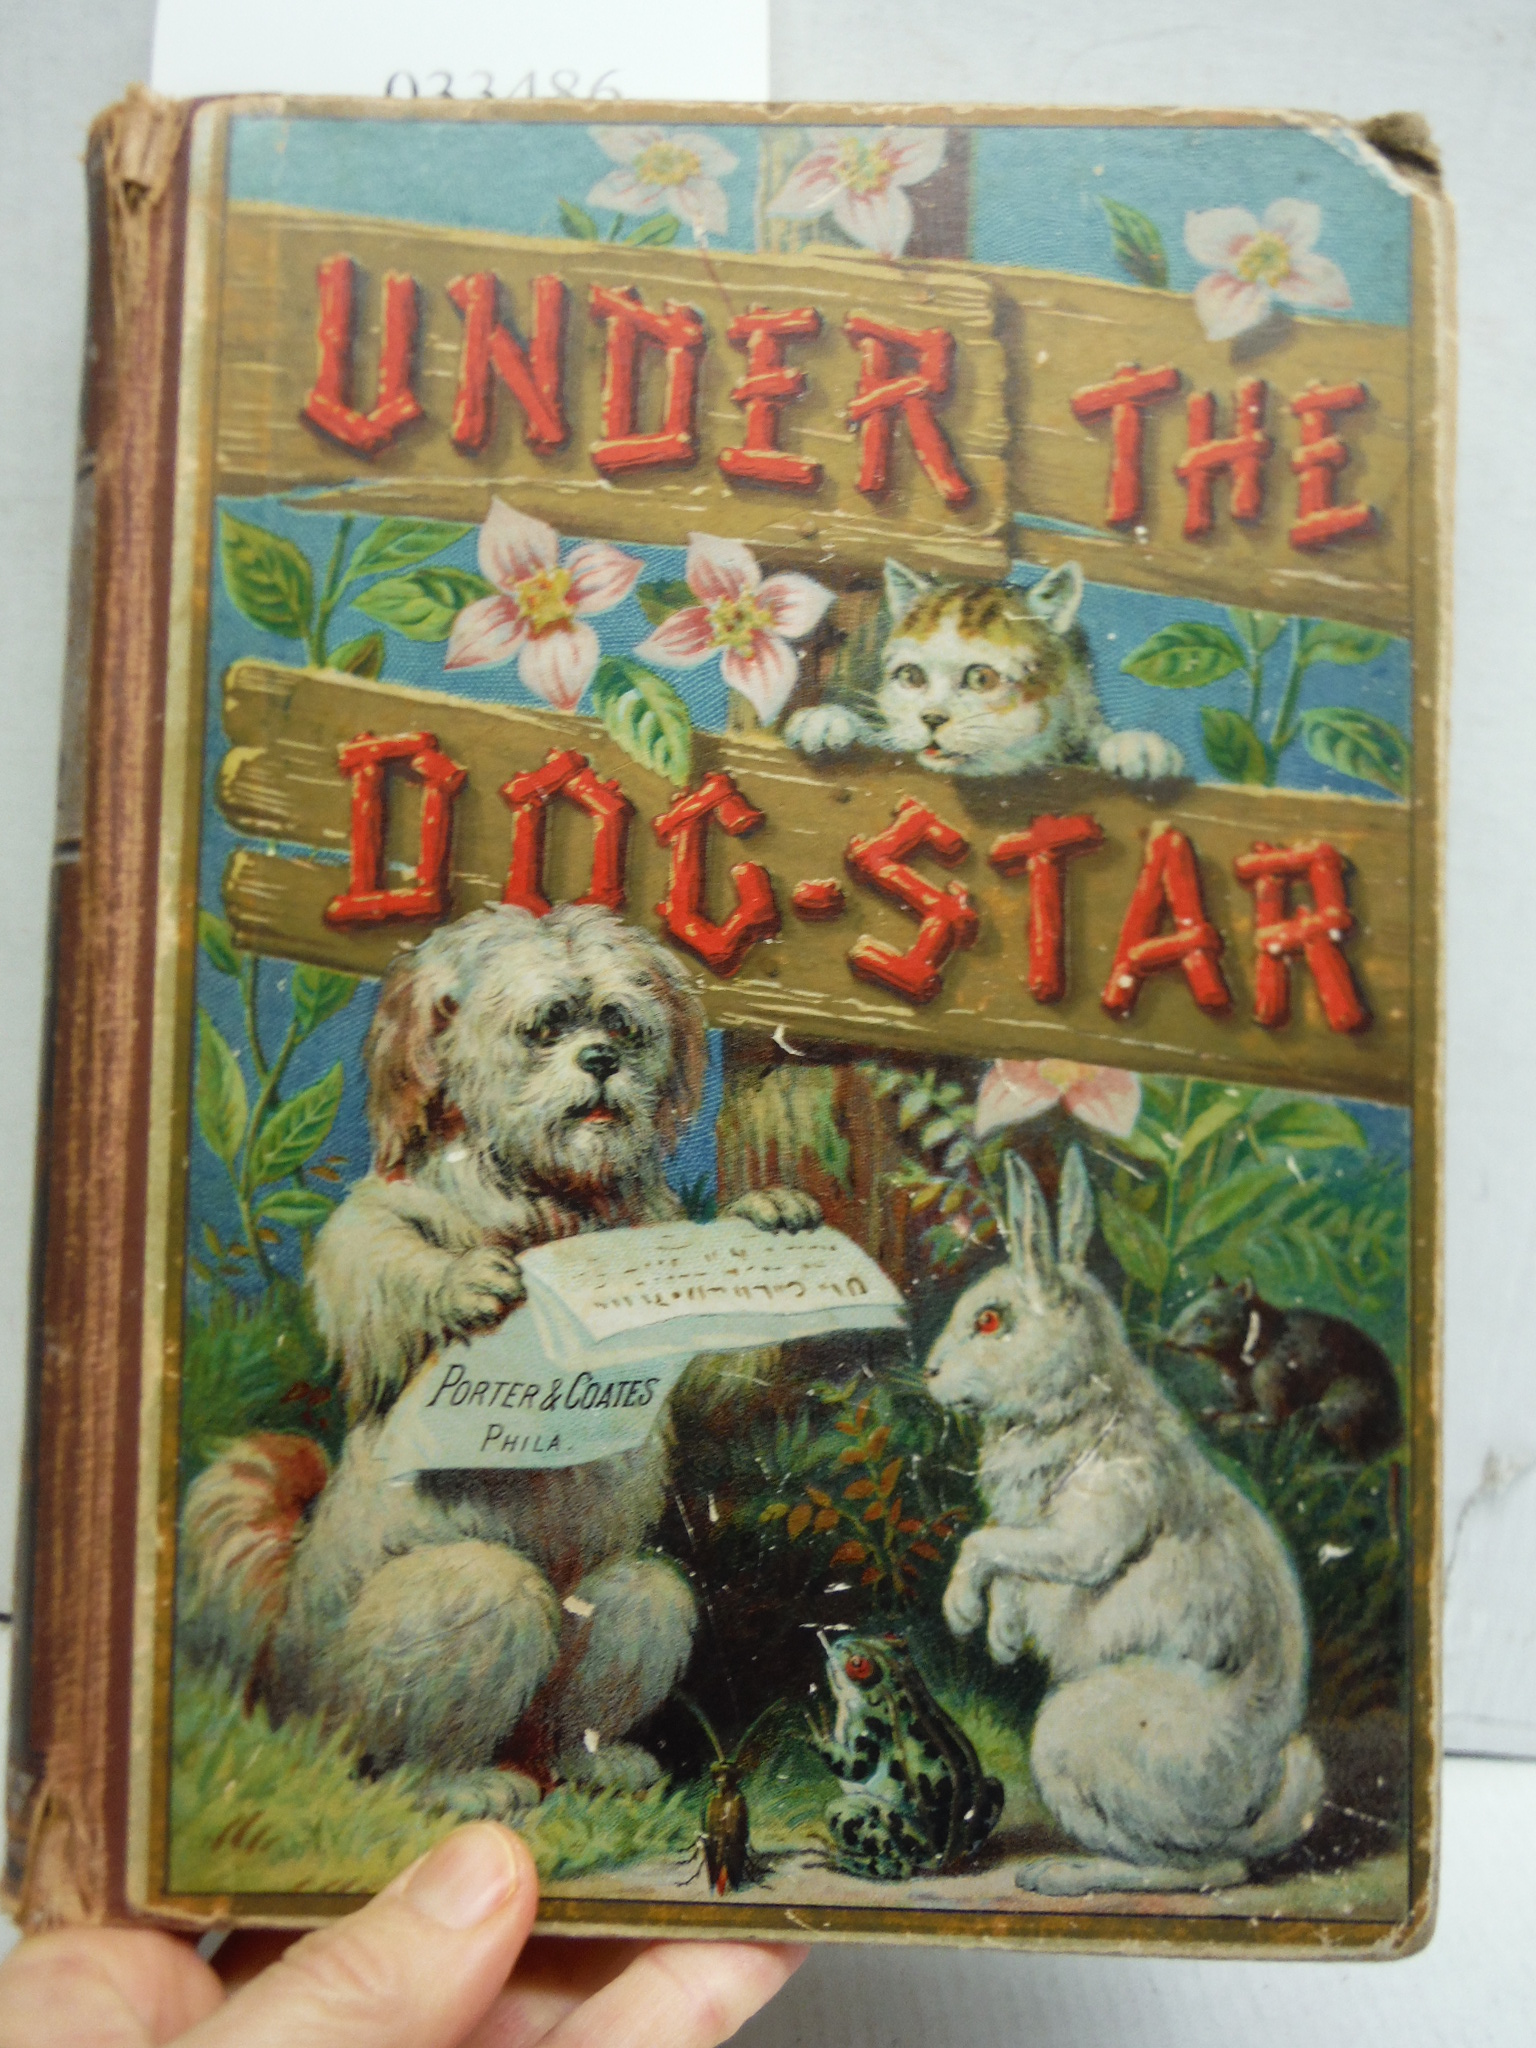 Under The Dog-Star